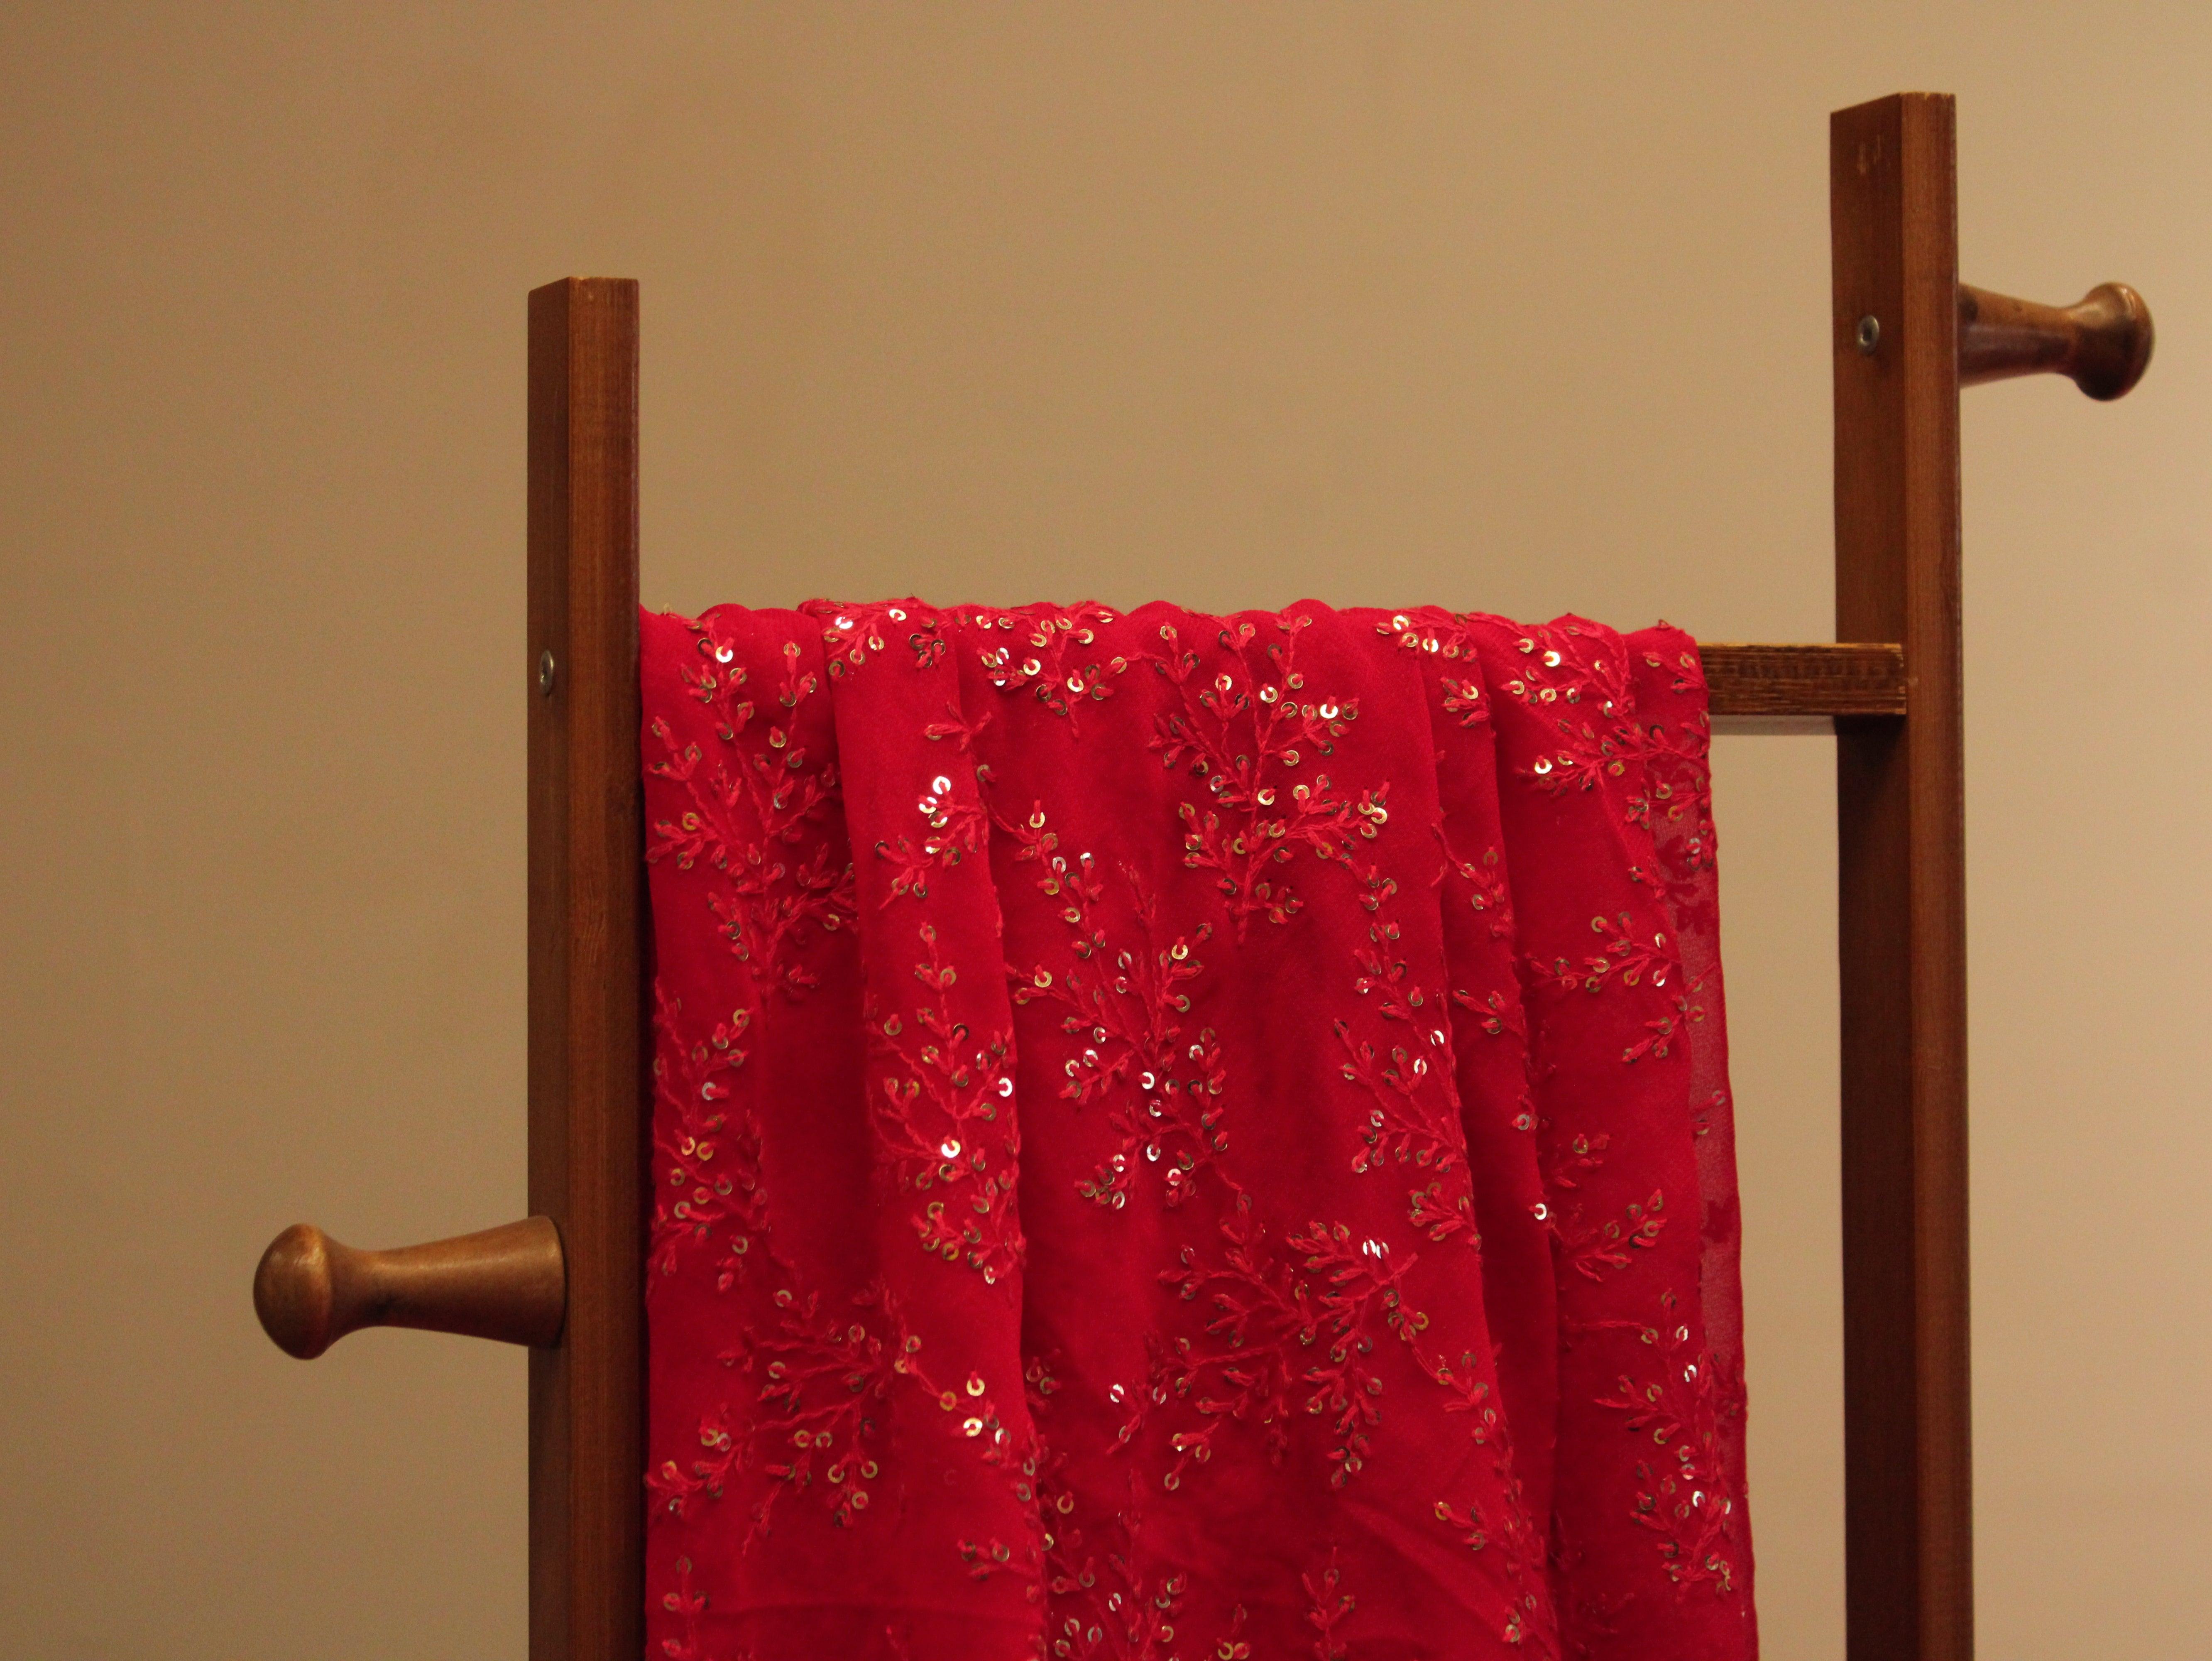 Bemberg Georgette Lucknawi Thread & Sequin Work Fabric - Red - M'Foks